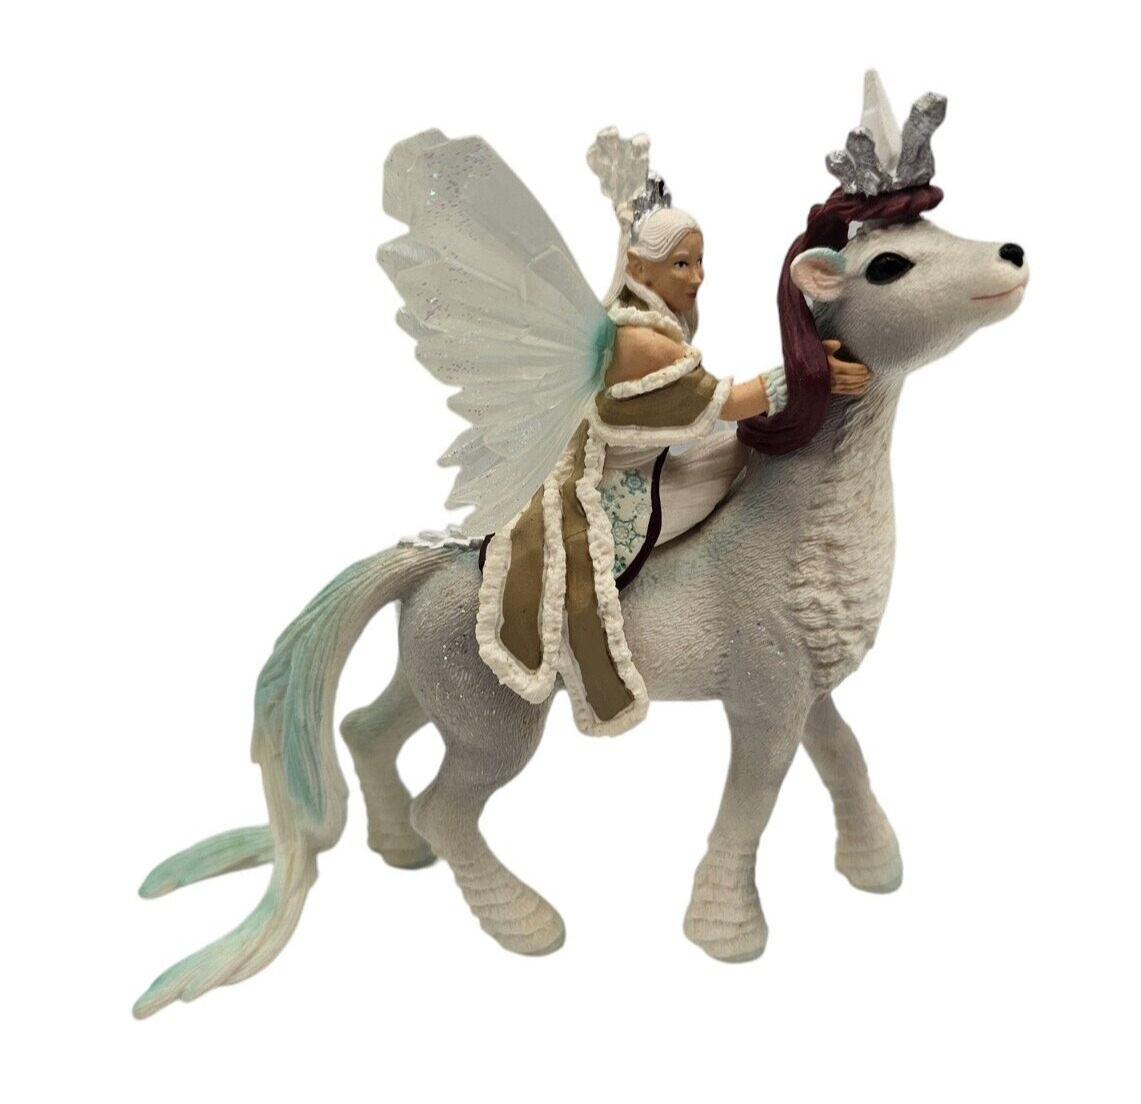 Schleich Bayala Yamuna Ice Fairy Elf 70472 Winged Figurine With unicorn